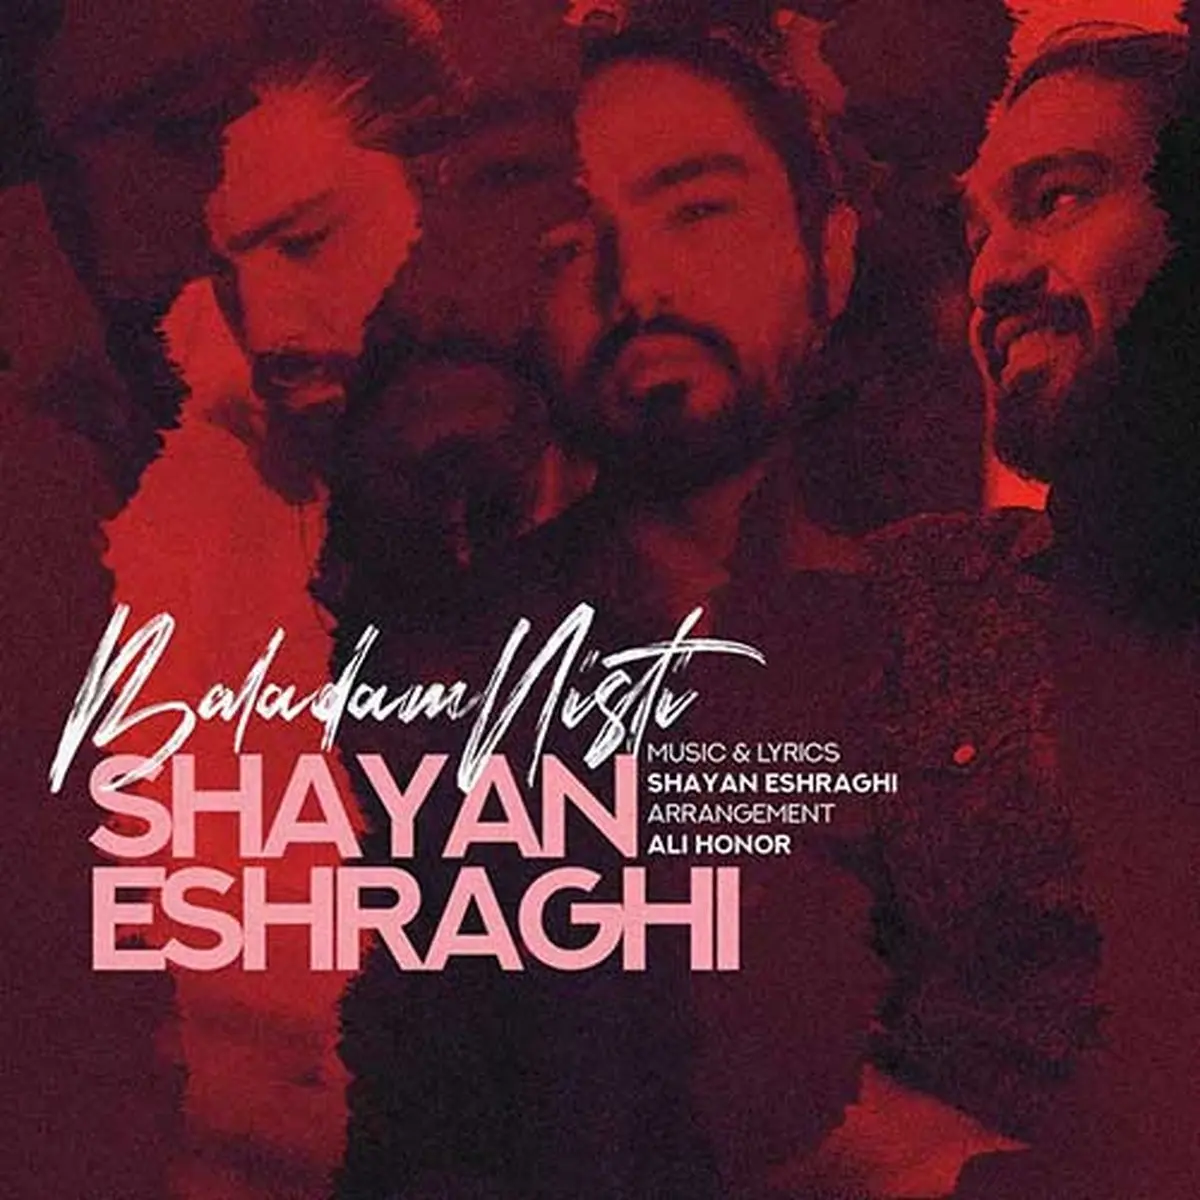 Shayan-Eshraghi-Baladam-Nisti